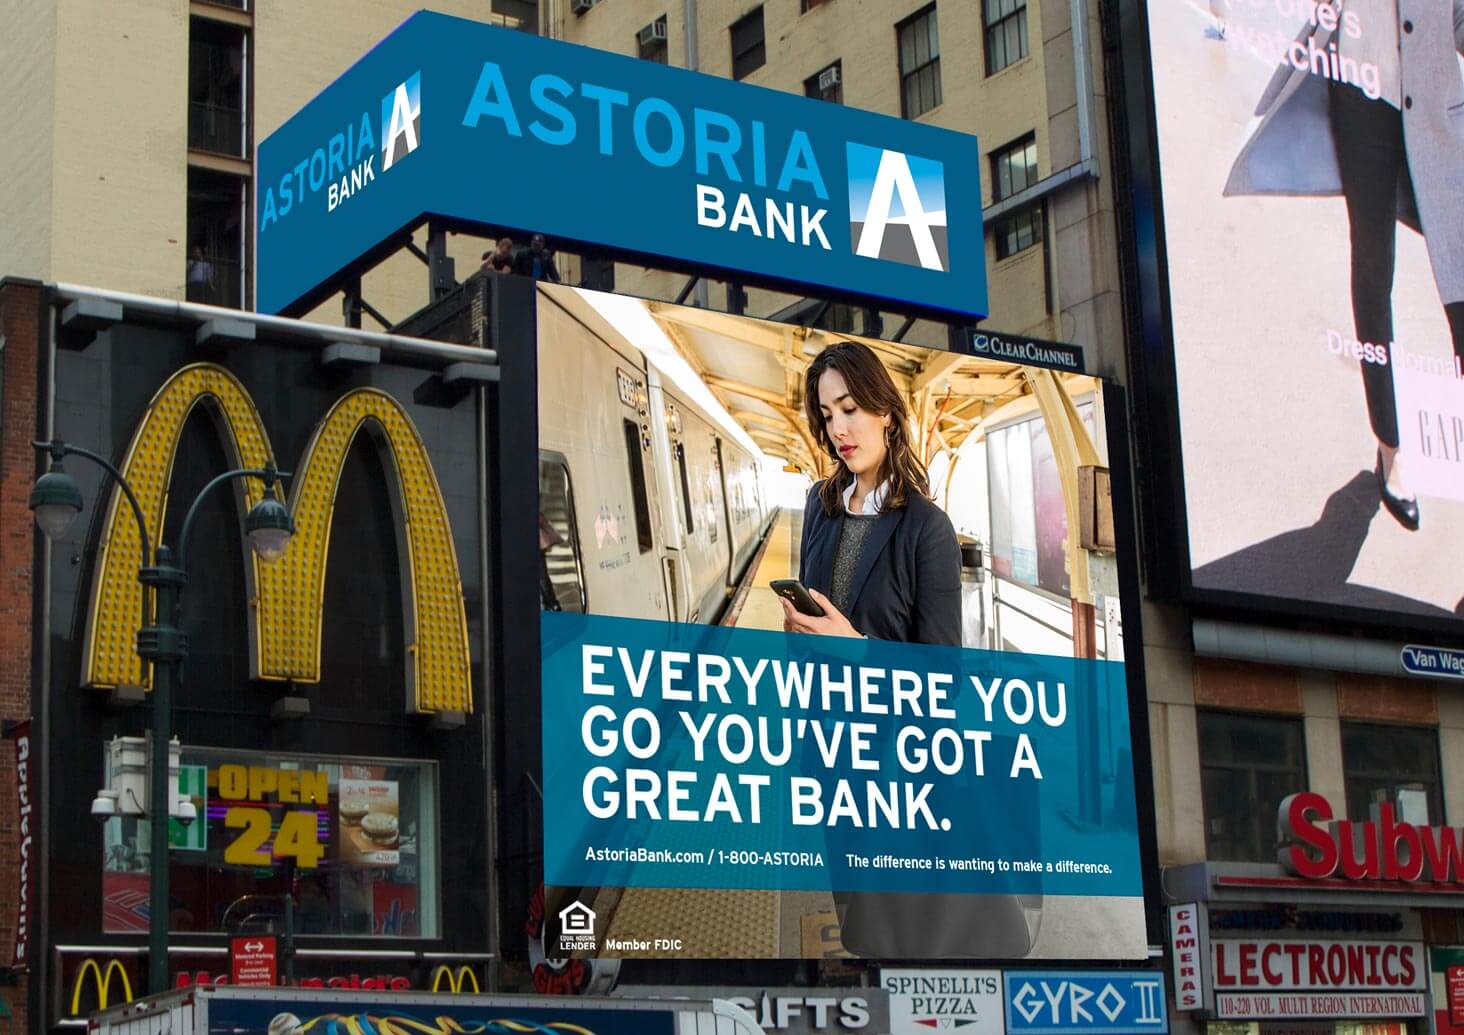 Astoria Bank. Everywhere you go you've got a great bank.